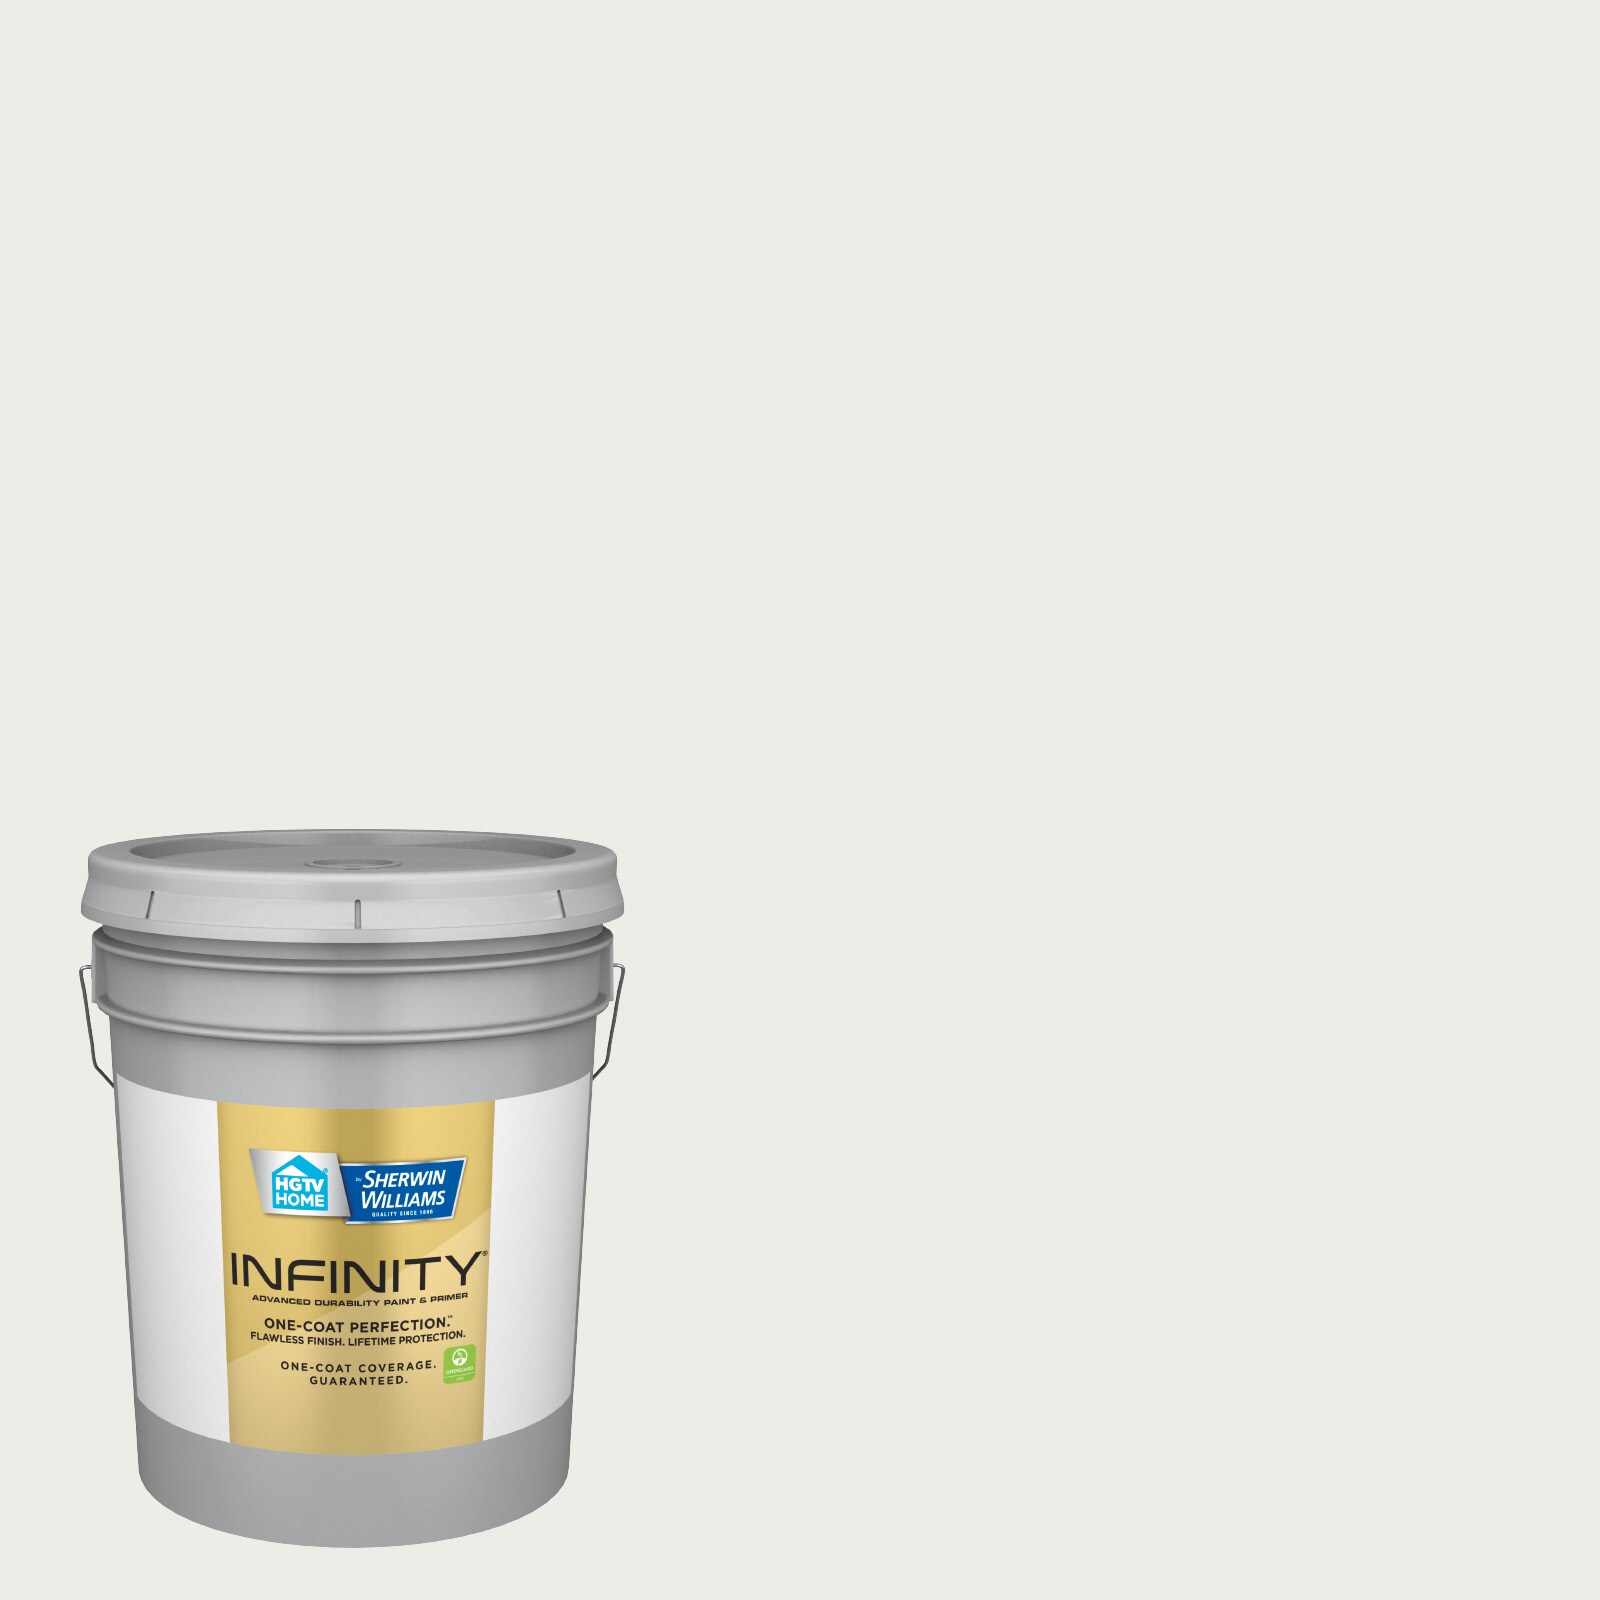 HGTV HOME by Sherwin-Williams Showcase Semi-gloss Extra White Hgsw4005  Acrylic Interior Paint + Primer (5-Gallon) at